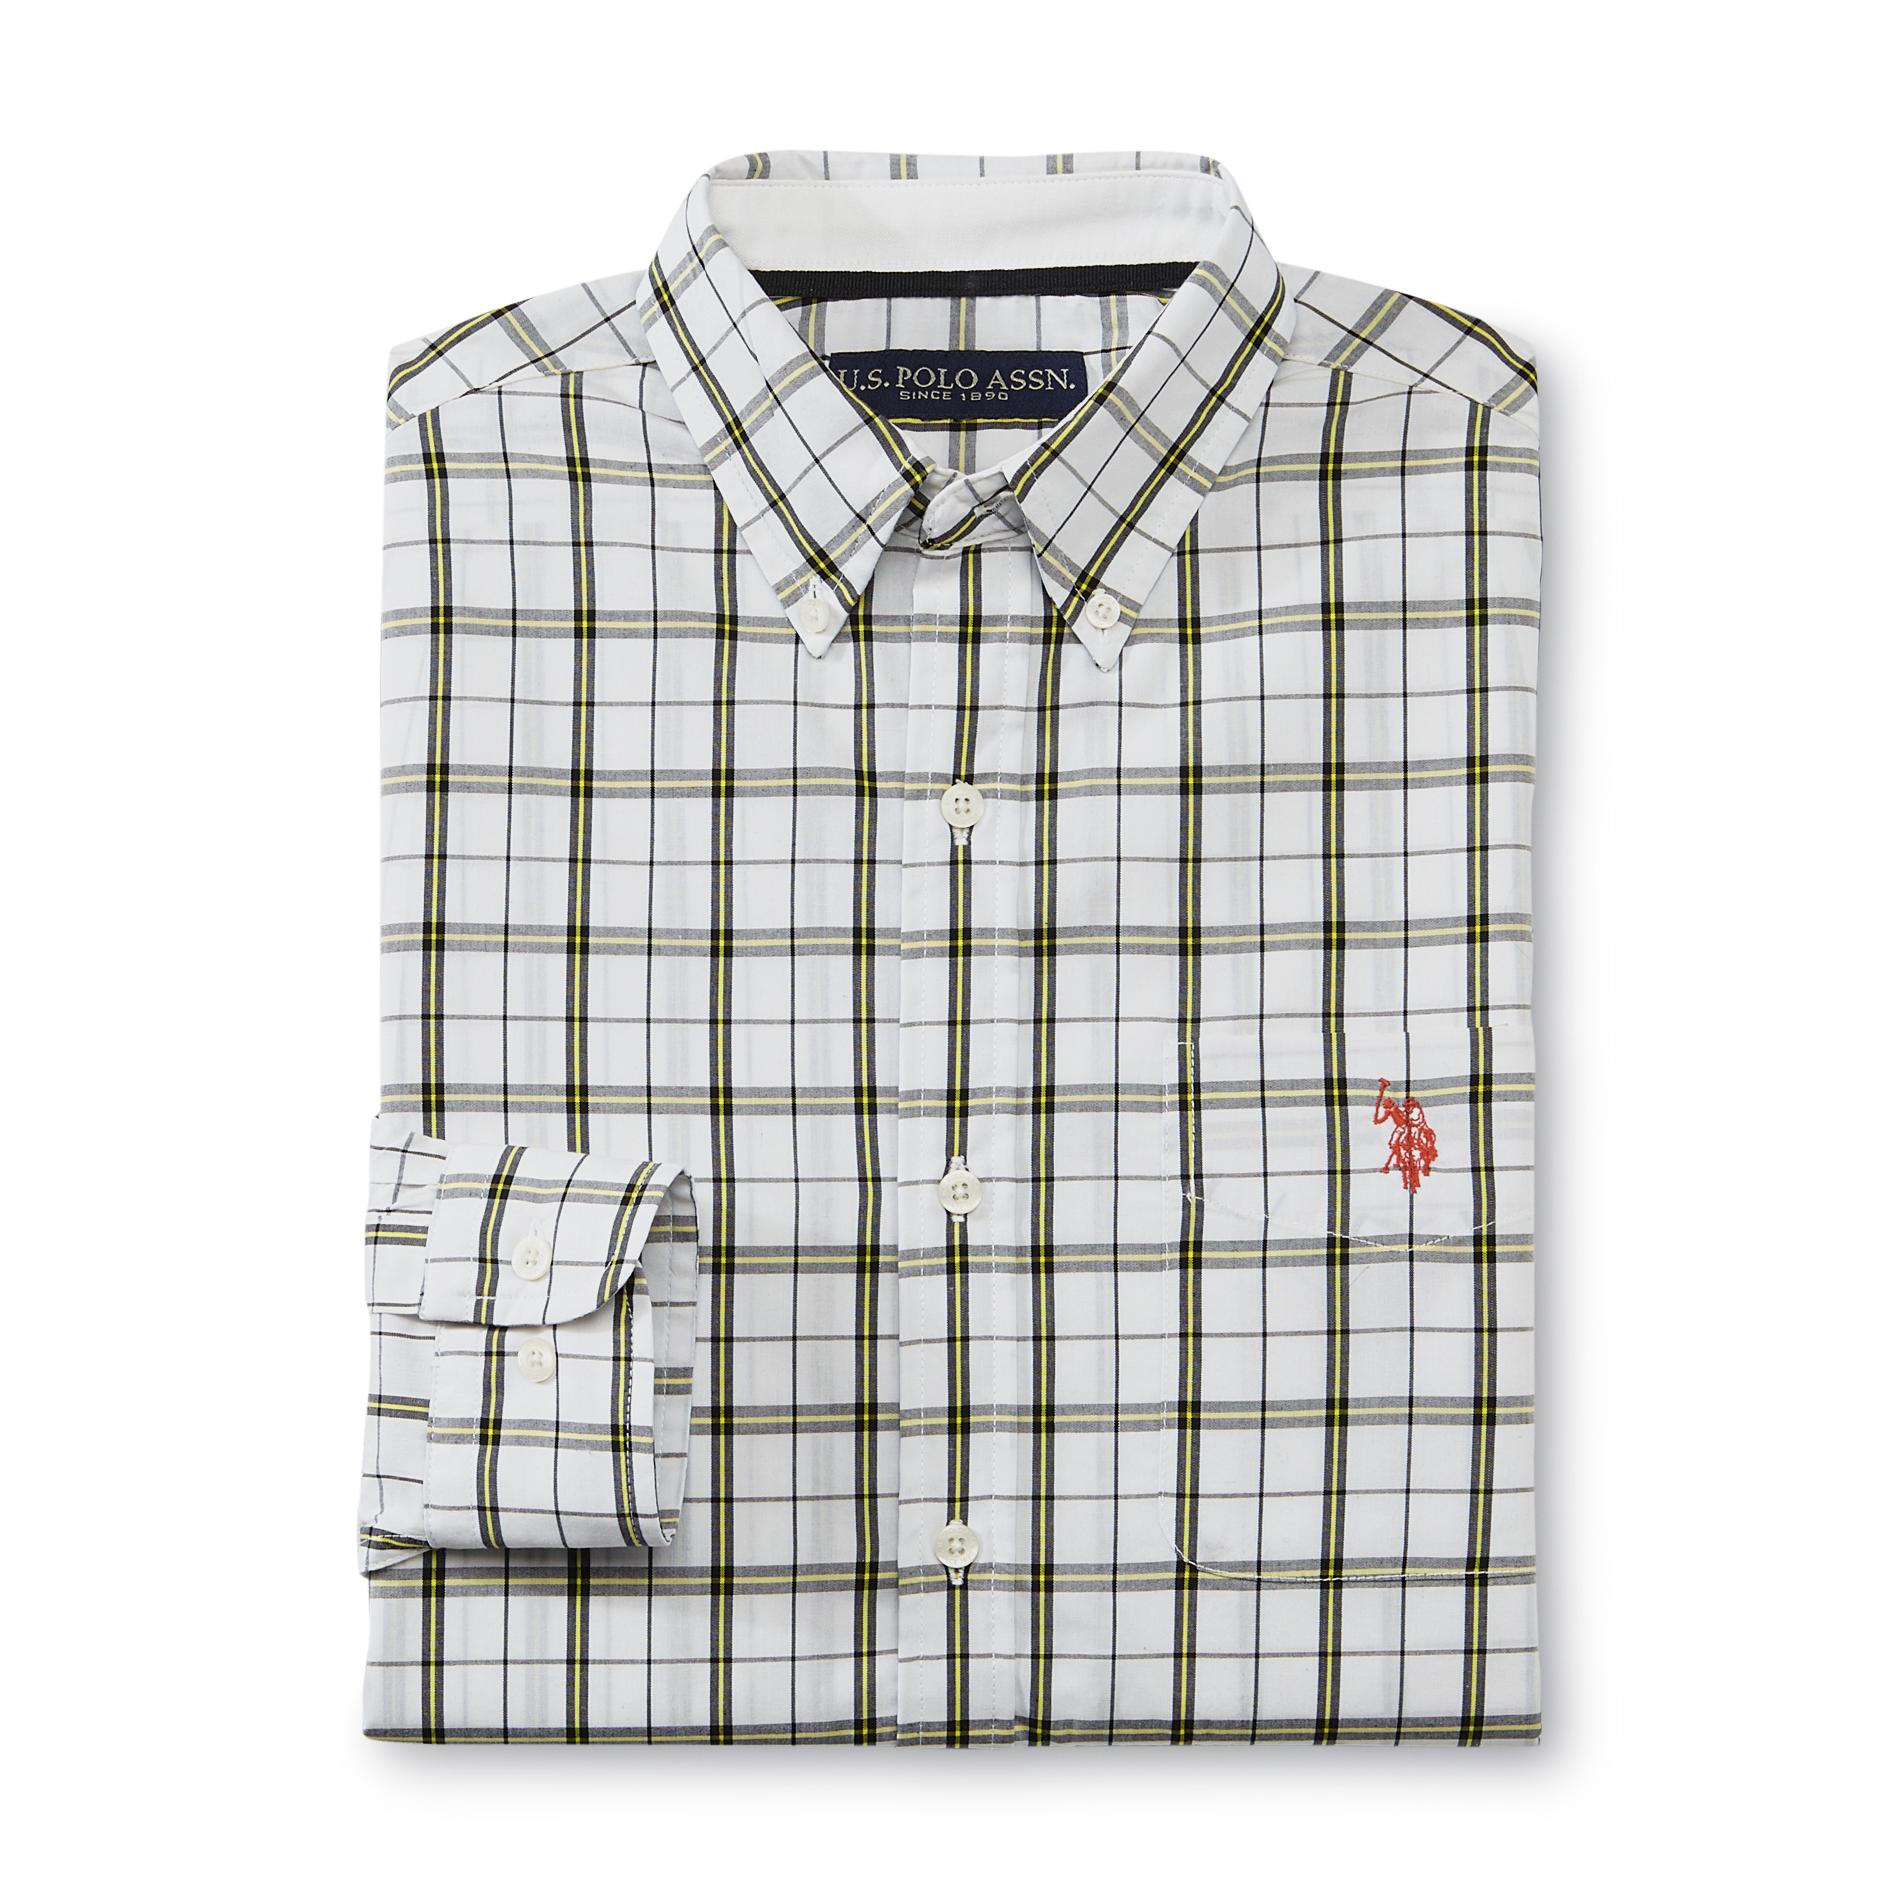 U.S. Polo Assn. Men's Button-Front Shirt - Windowpane Plaid